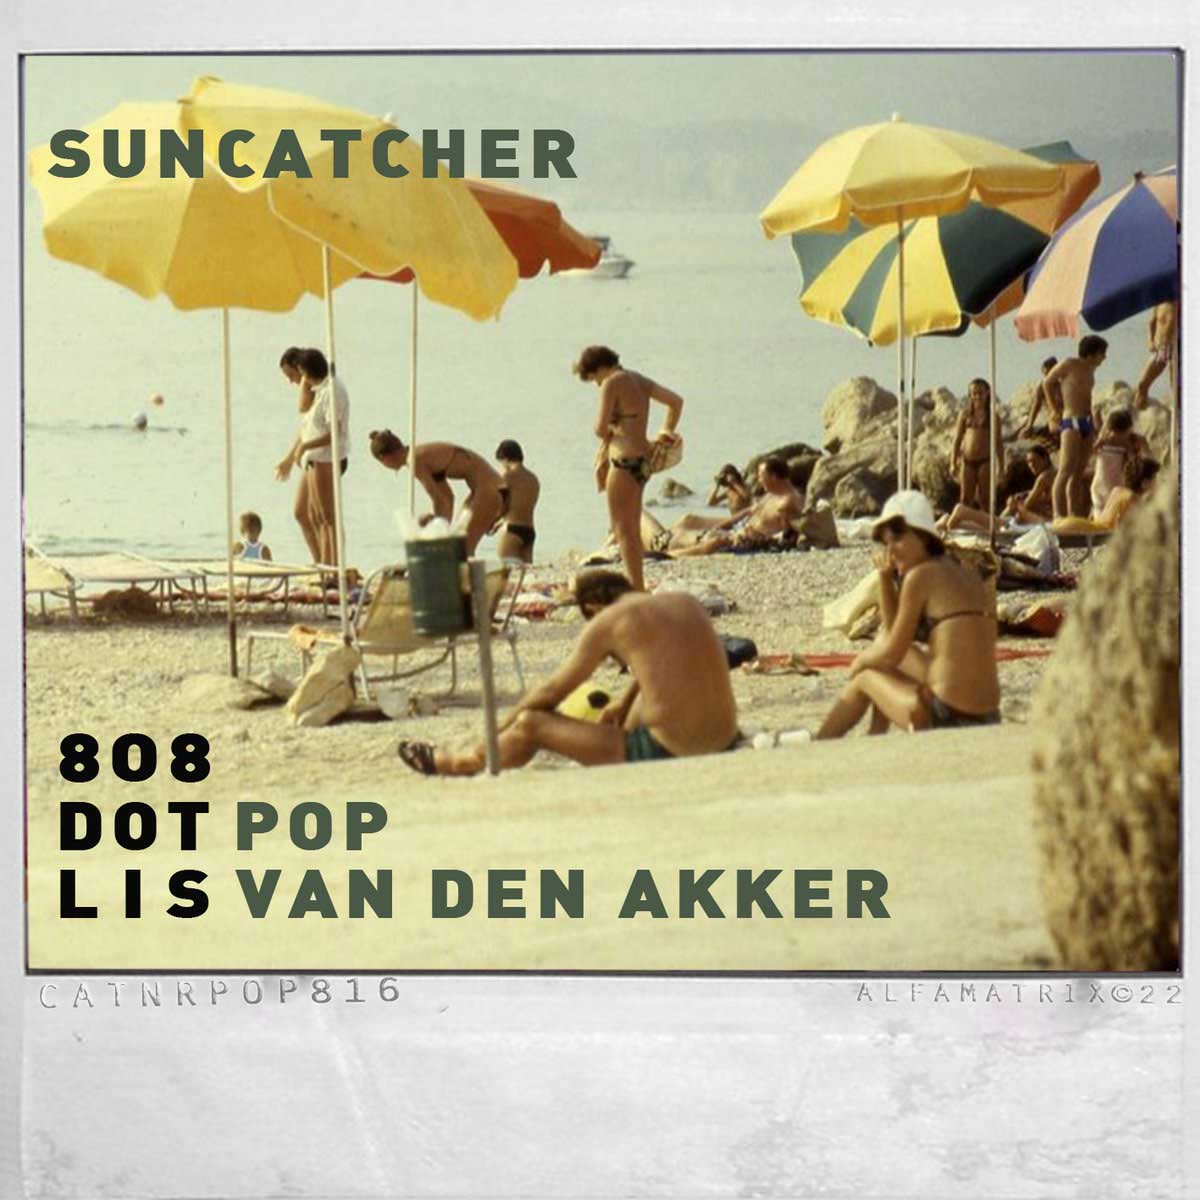 808 Dot Pop - Suncatcher - 808 Dot Pop - Suncatcher